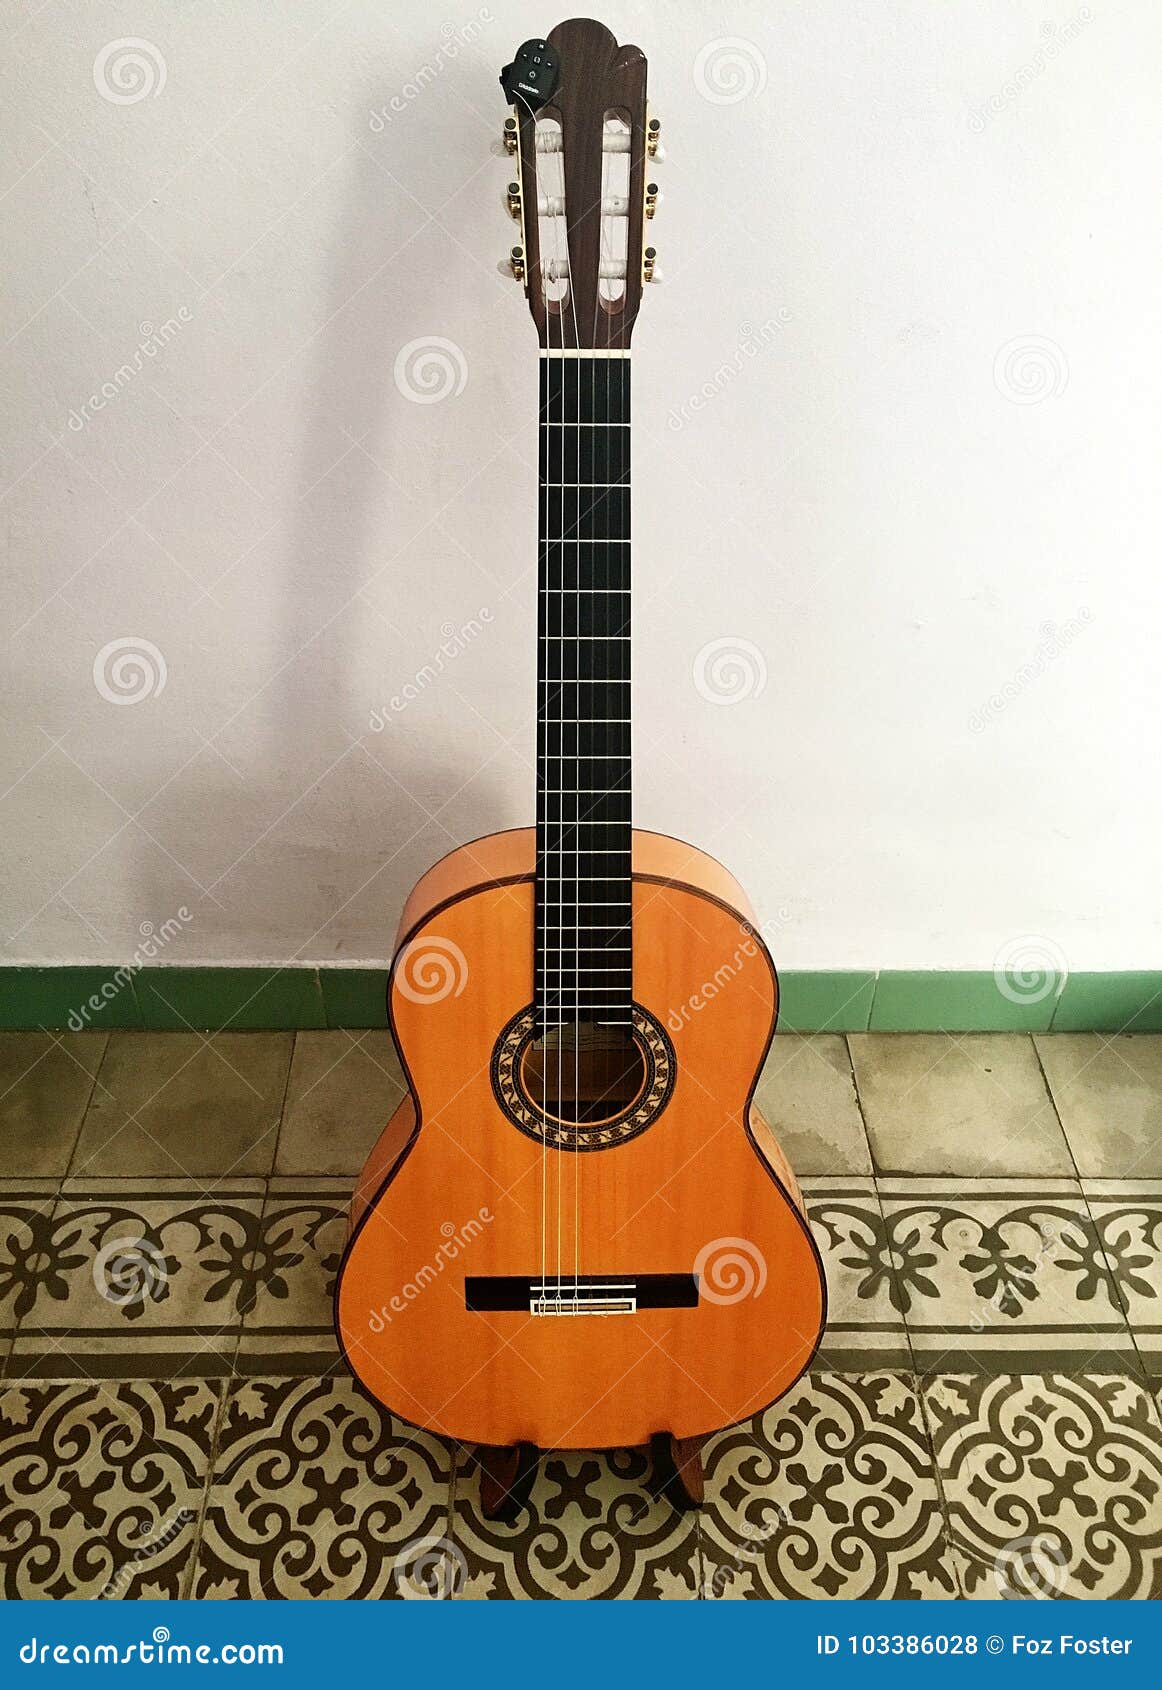 Flamenco Guitar In Spanish Tiled Room Stock Photo Image Of Flamenco Room 103386028